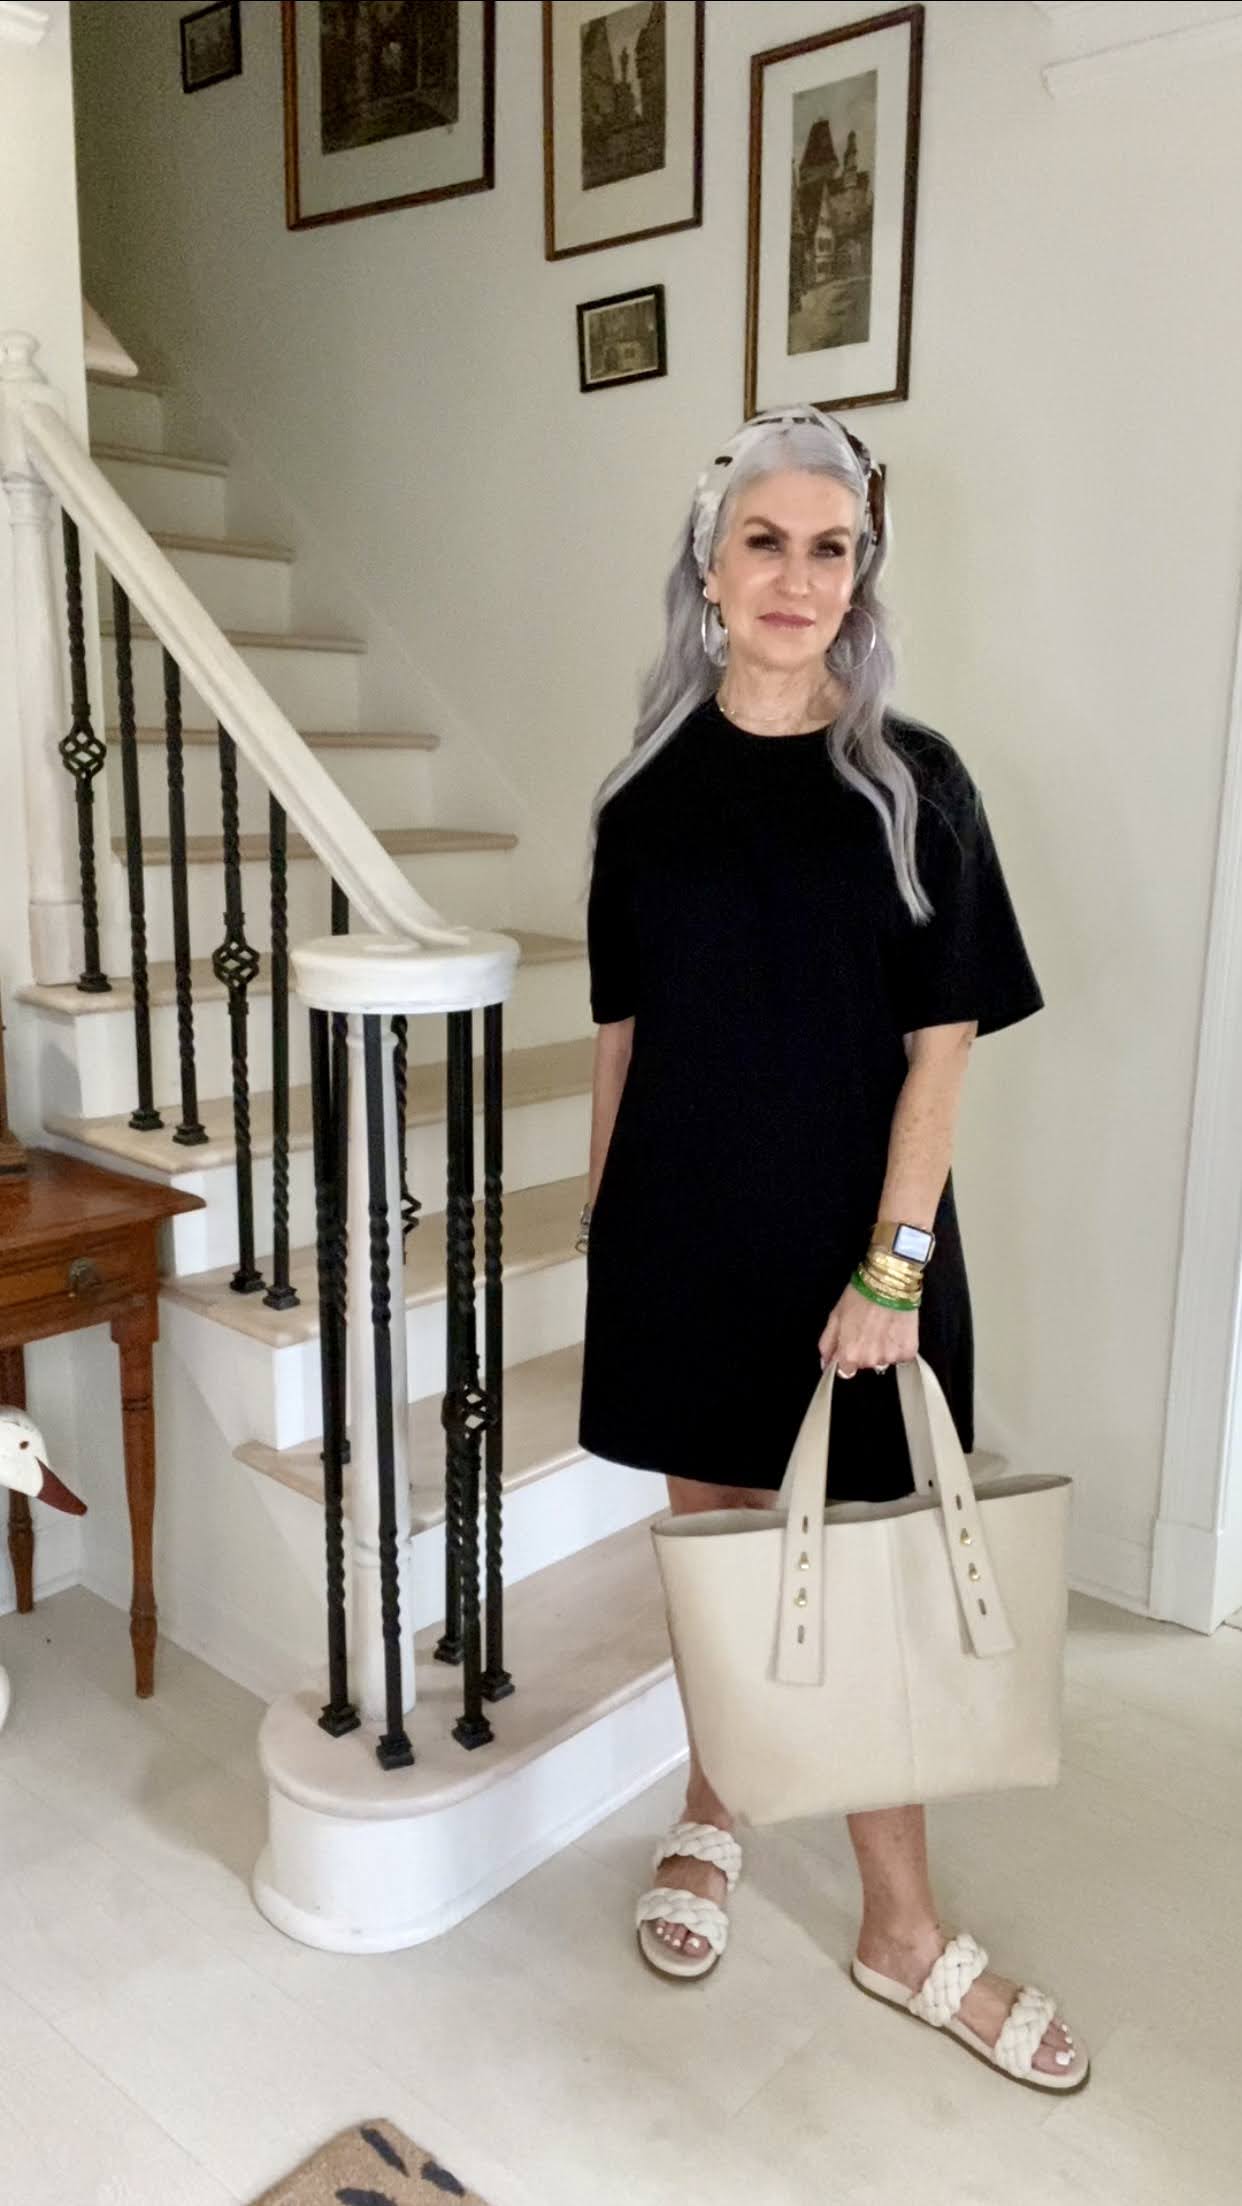 Silver hair lady styling black t-shirt dress